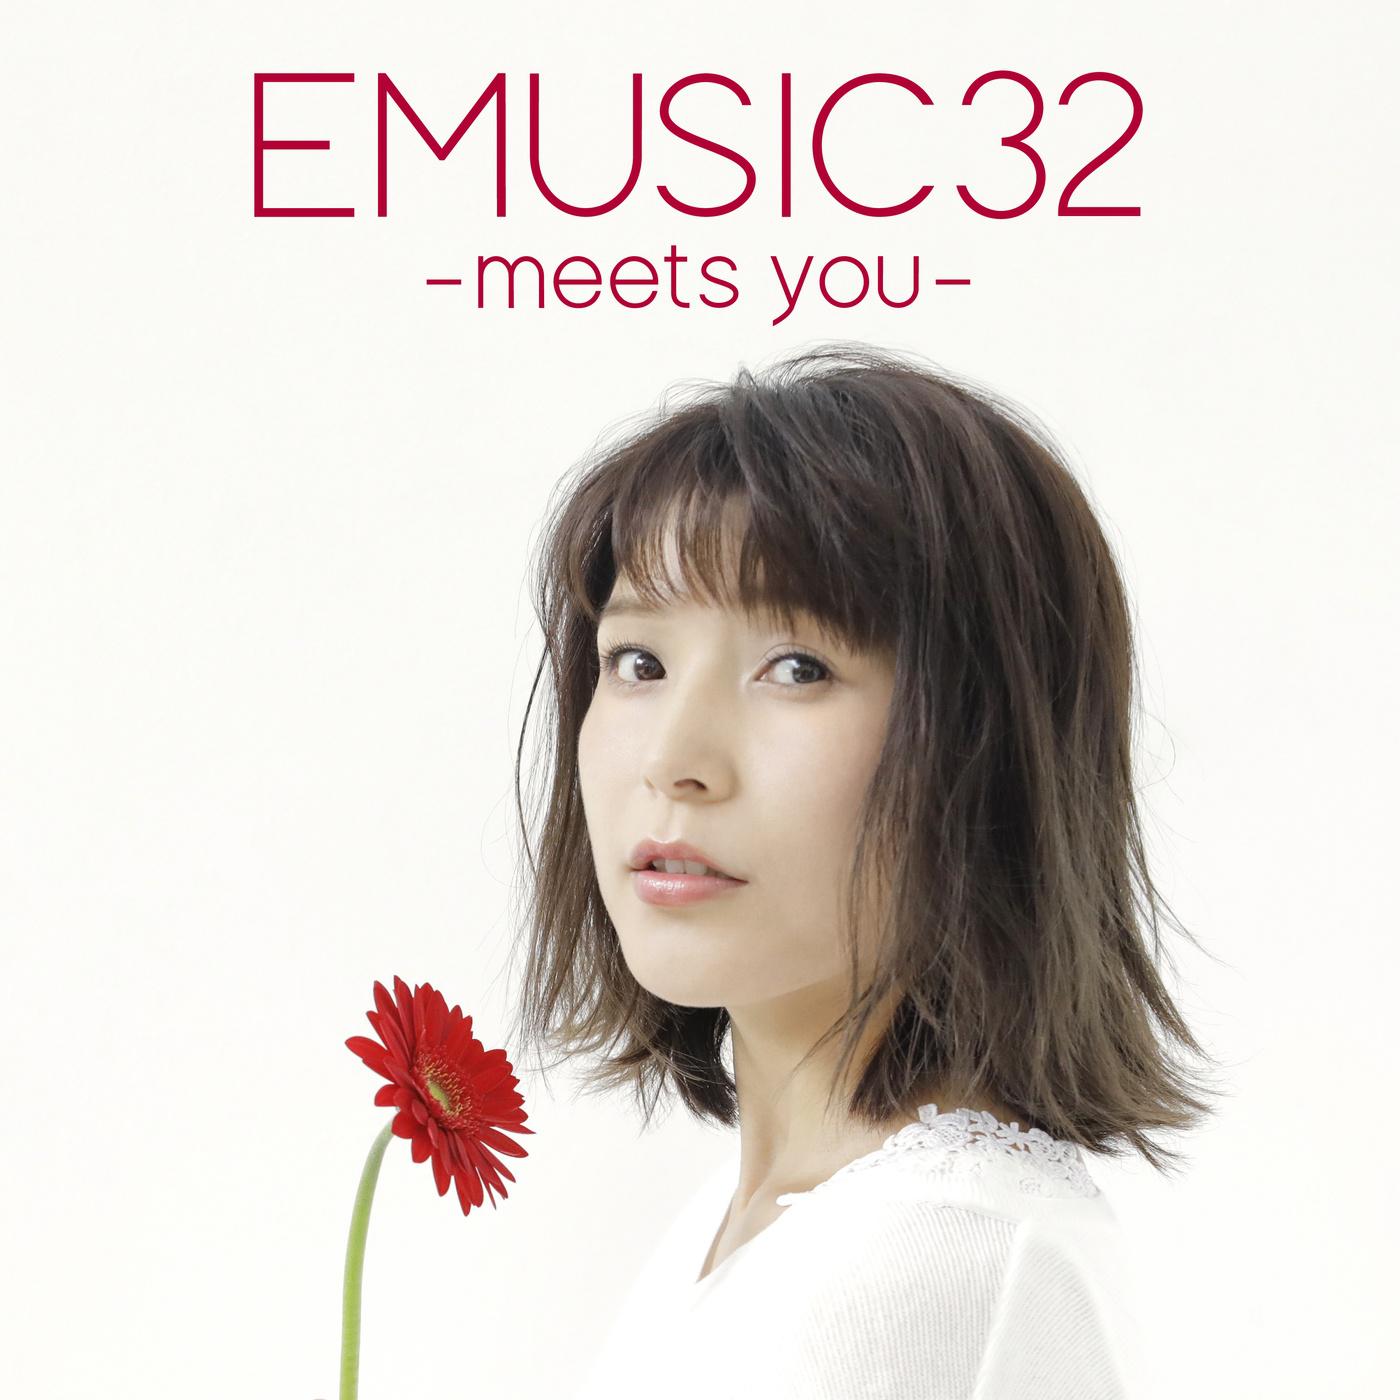 EMUSIC 32 -meets you-